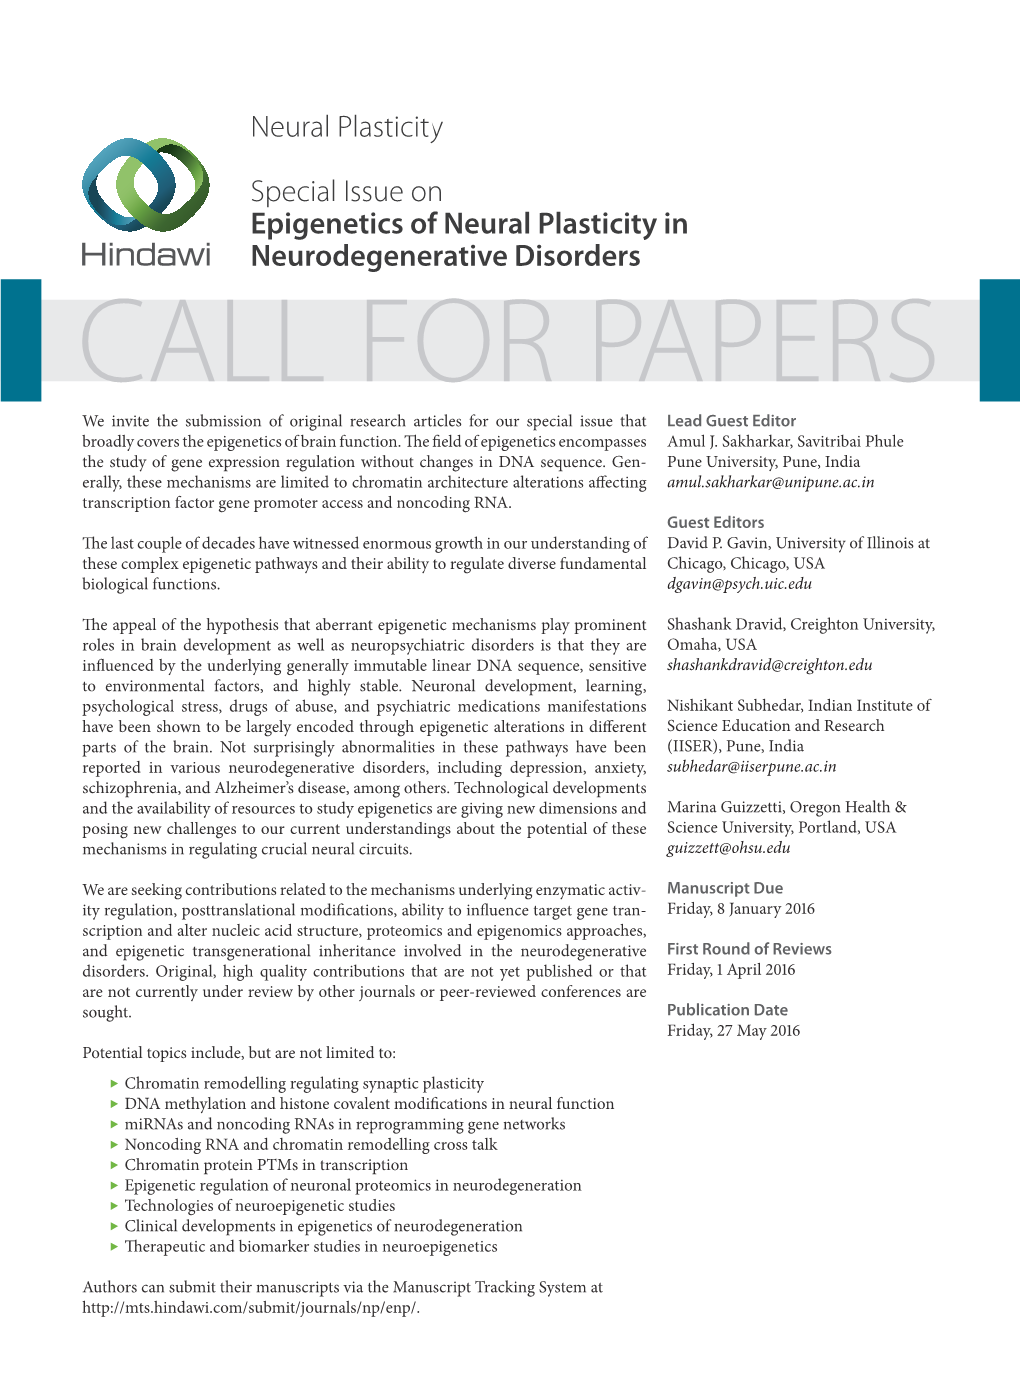 Epigenetics of Neural Plasticity in Neurodegenerative Disorders